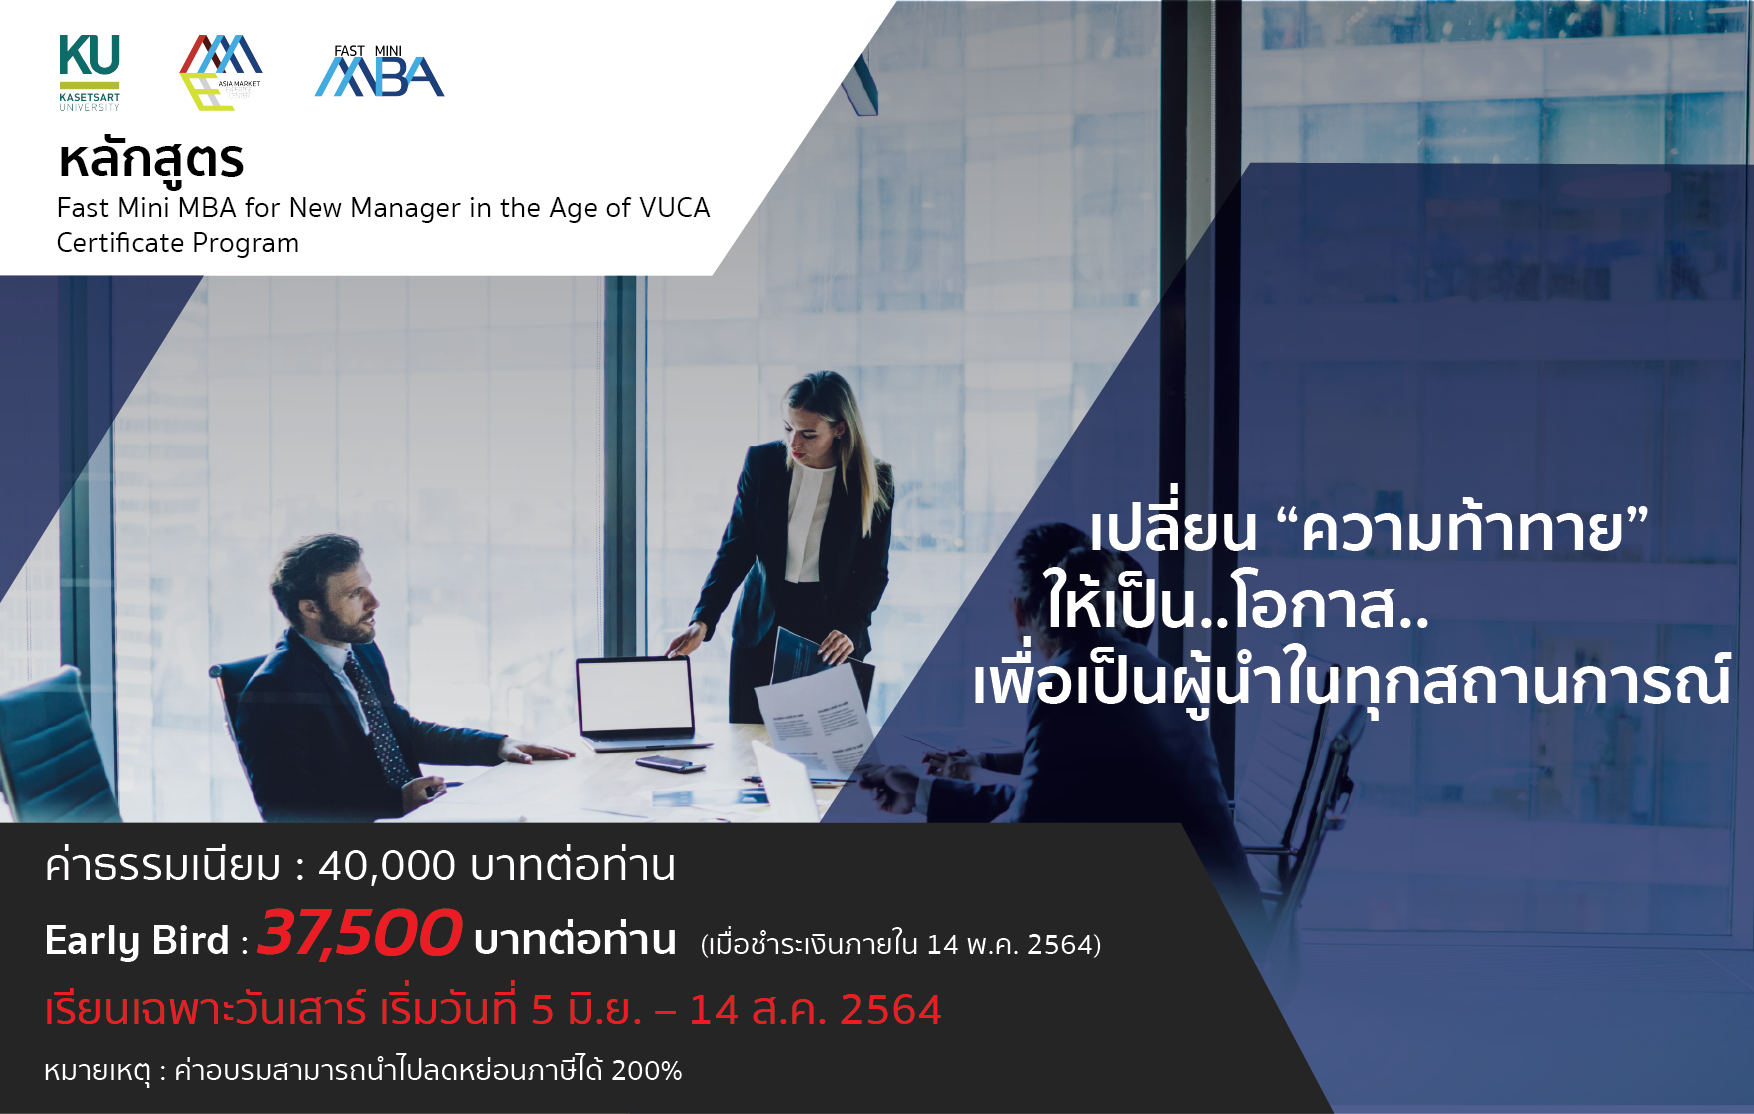  Fast Mini MBA for New Manager in the Age of VUCA หลักสูตรเร่งรัดระยะสั้นด้านการบริหารธุรกิจ มหาวิทยาลัยเกษตรศาสตร์ 